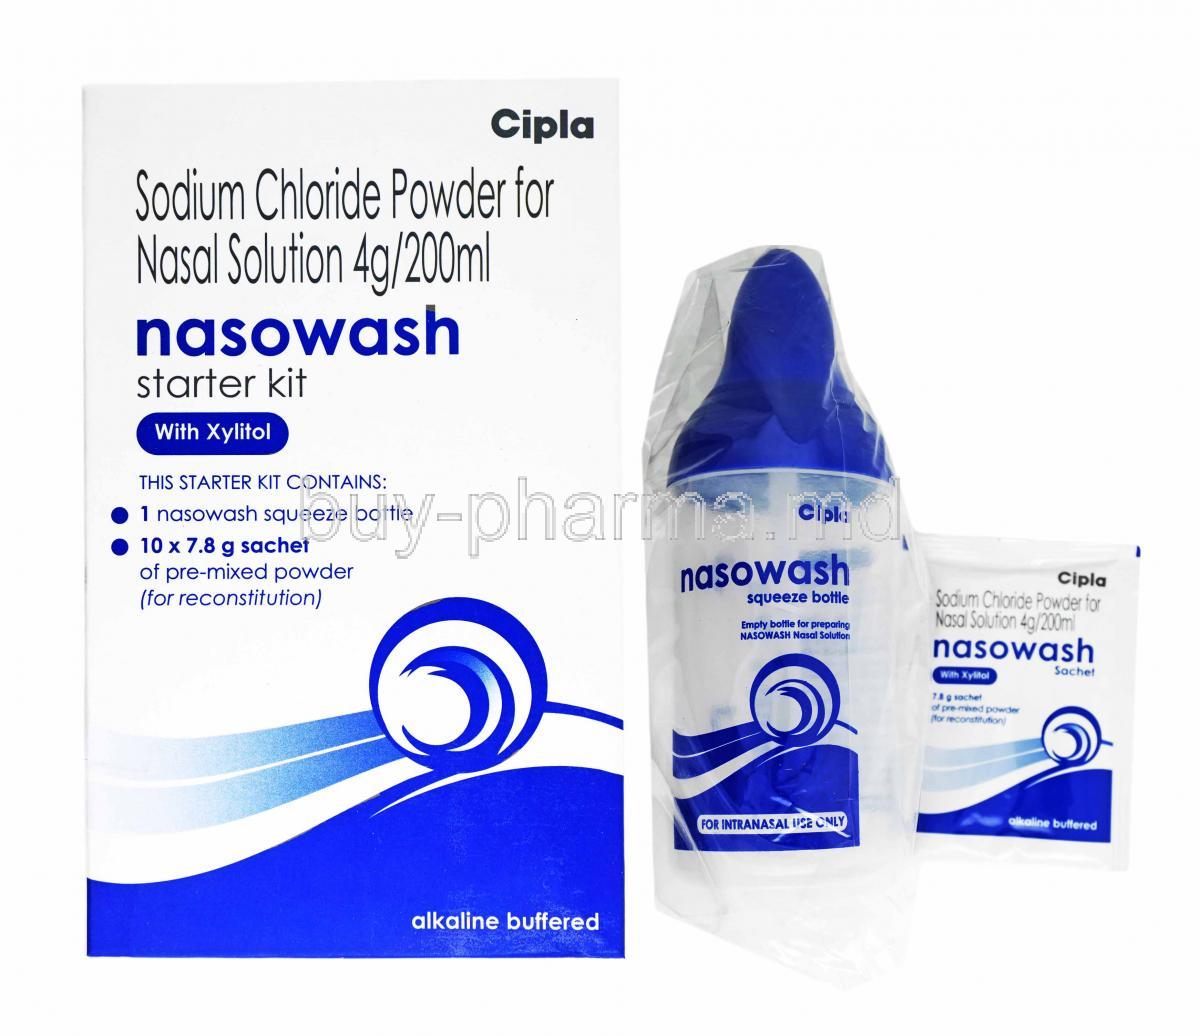 Nasowash Powder for Nasal Solution, Sodium Chloride box, bottle and sachet